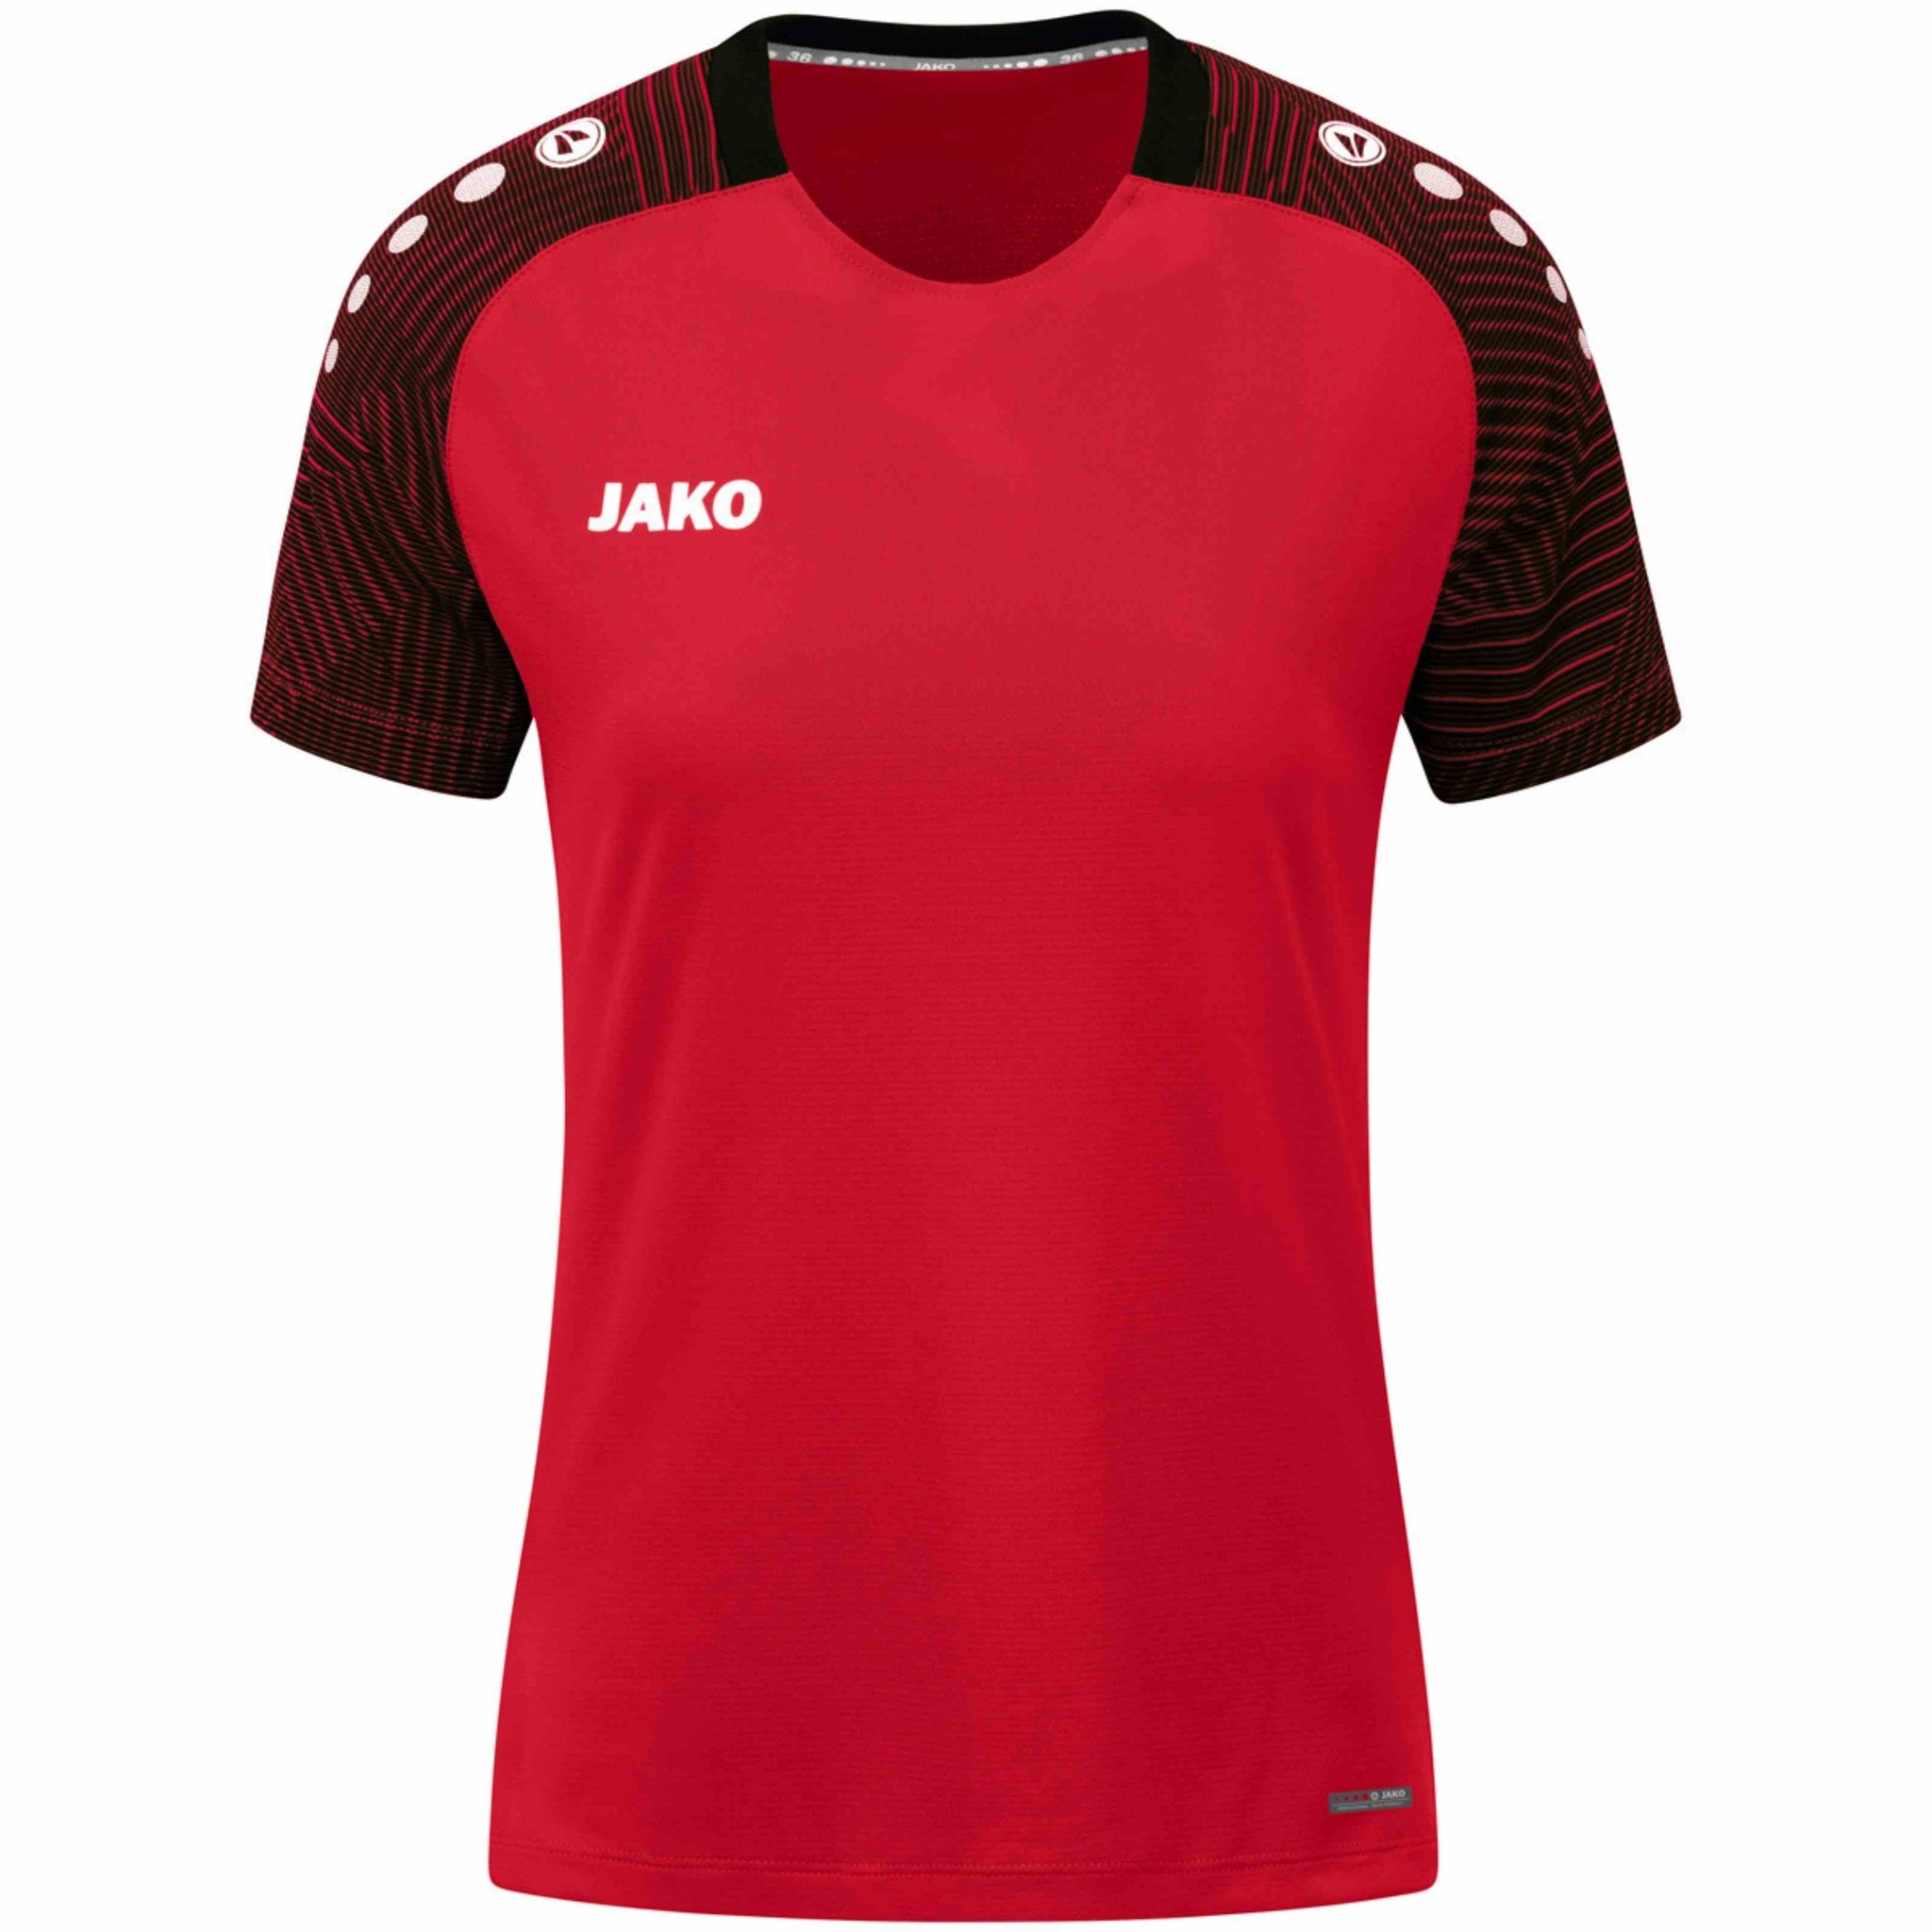 JAKO 6122 T-shirt Performance Red Ladies - KW FLEX racket specialist